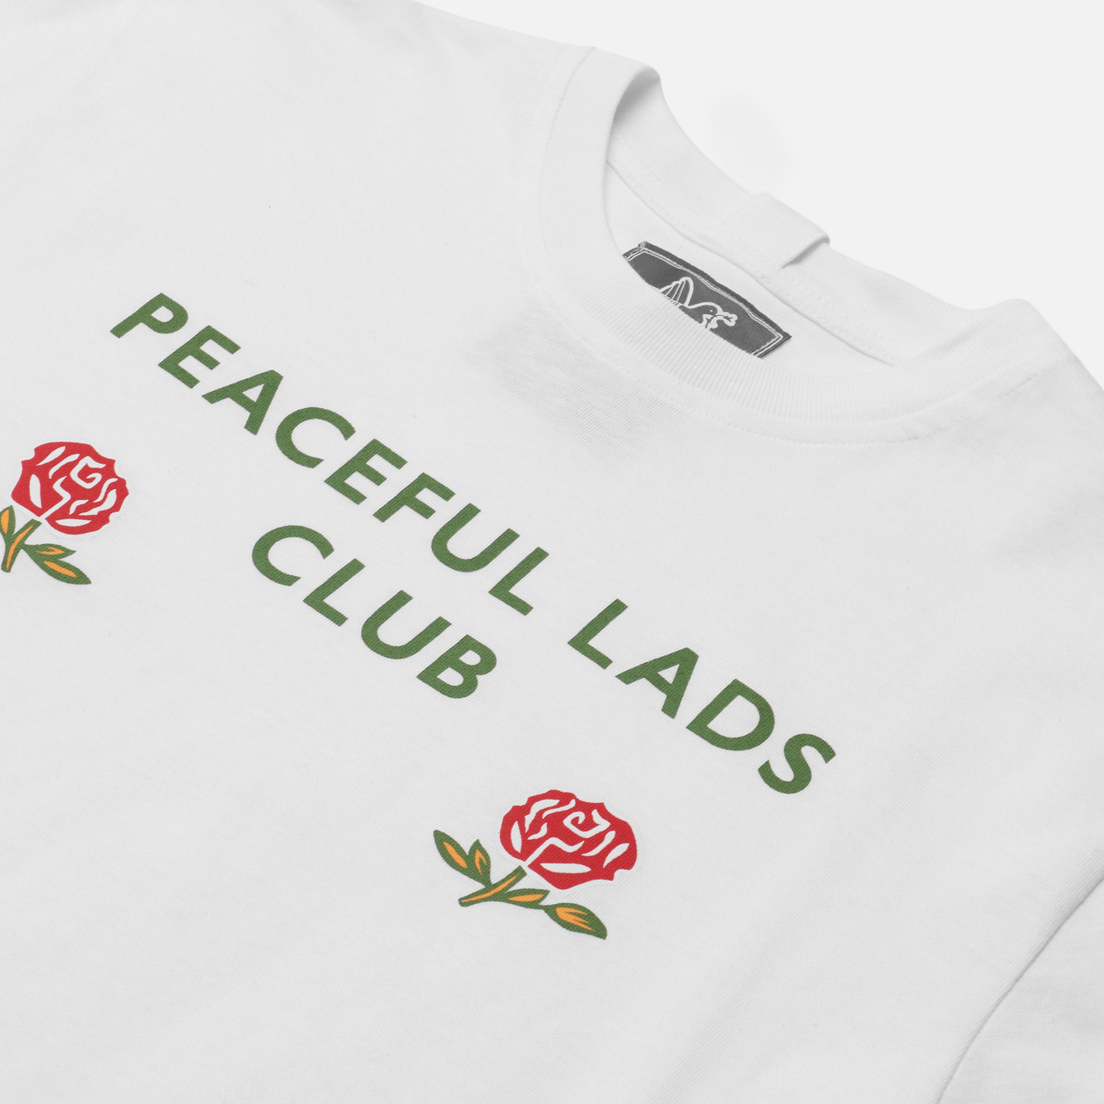 Peaceful Hooligan Мужская футболка Lads Club